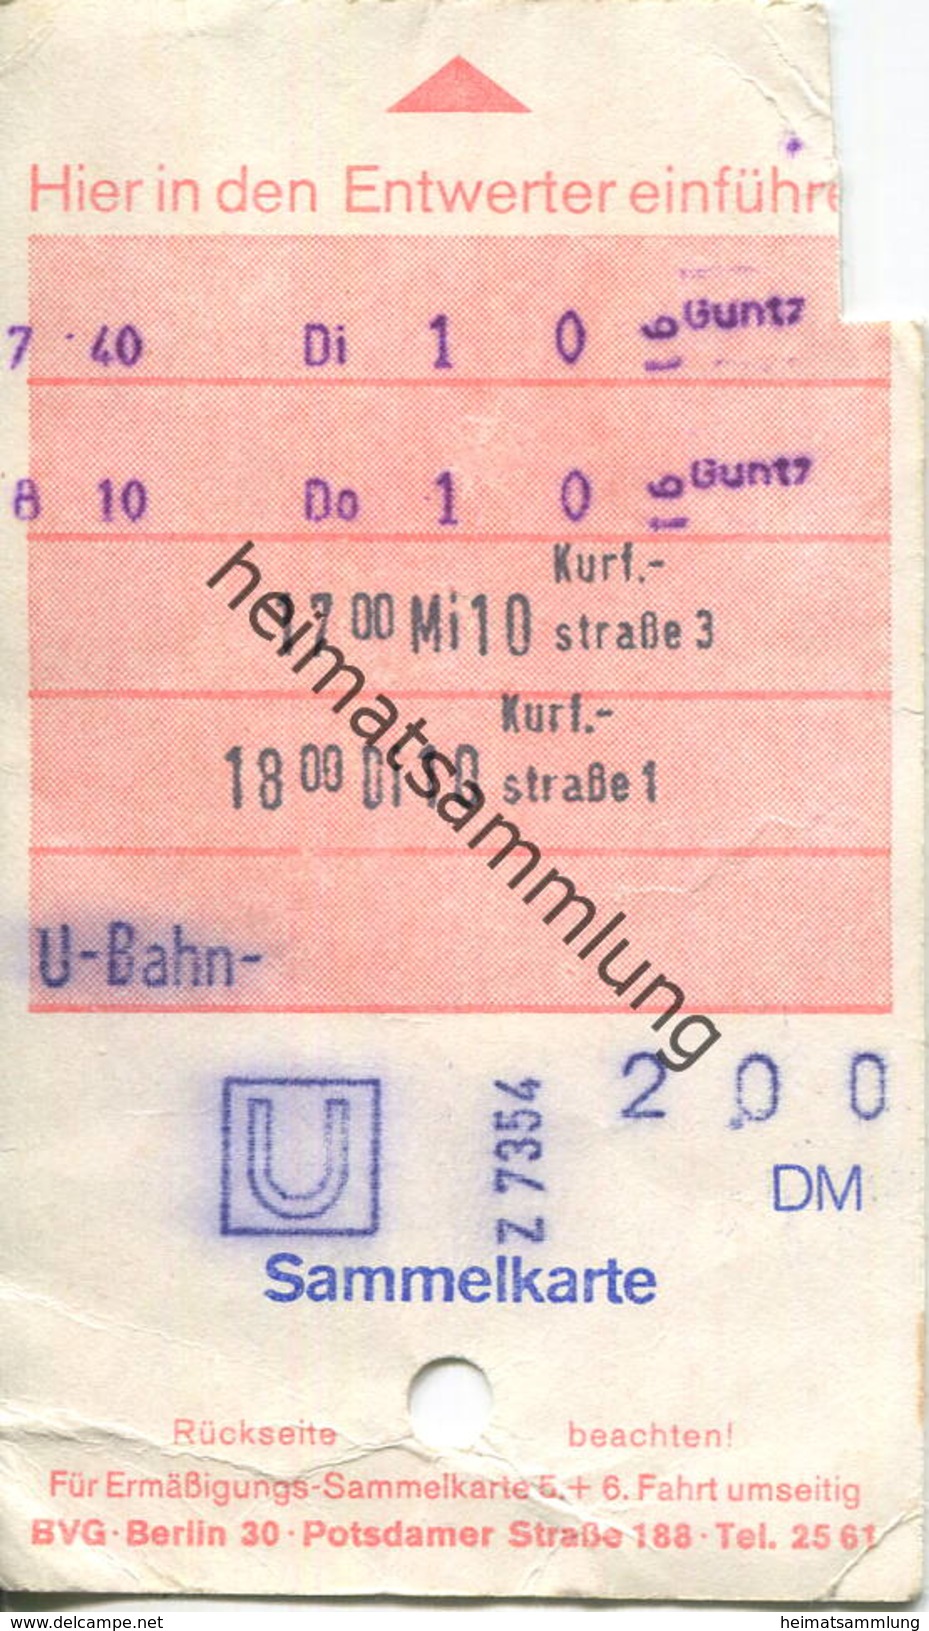 Deutschland - Berlin - Sammelkarte U-Bahn 4 Fahrten - Europa